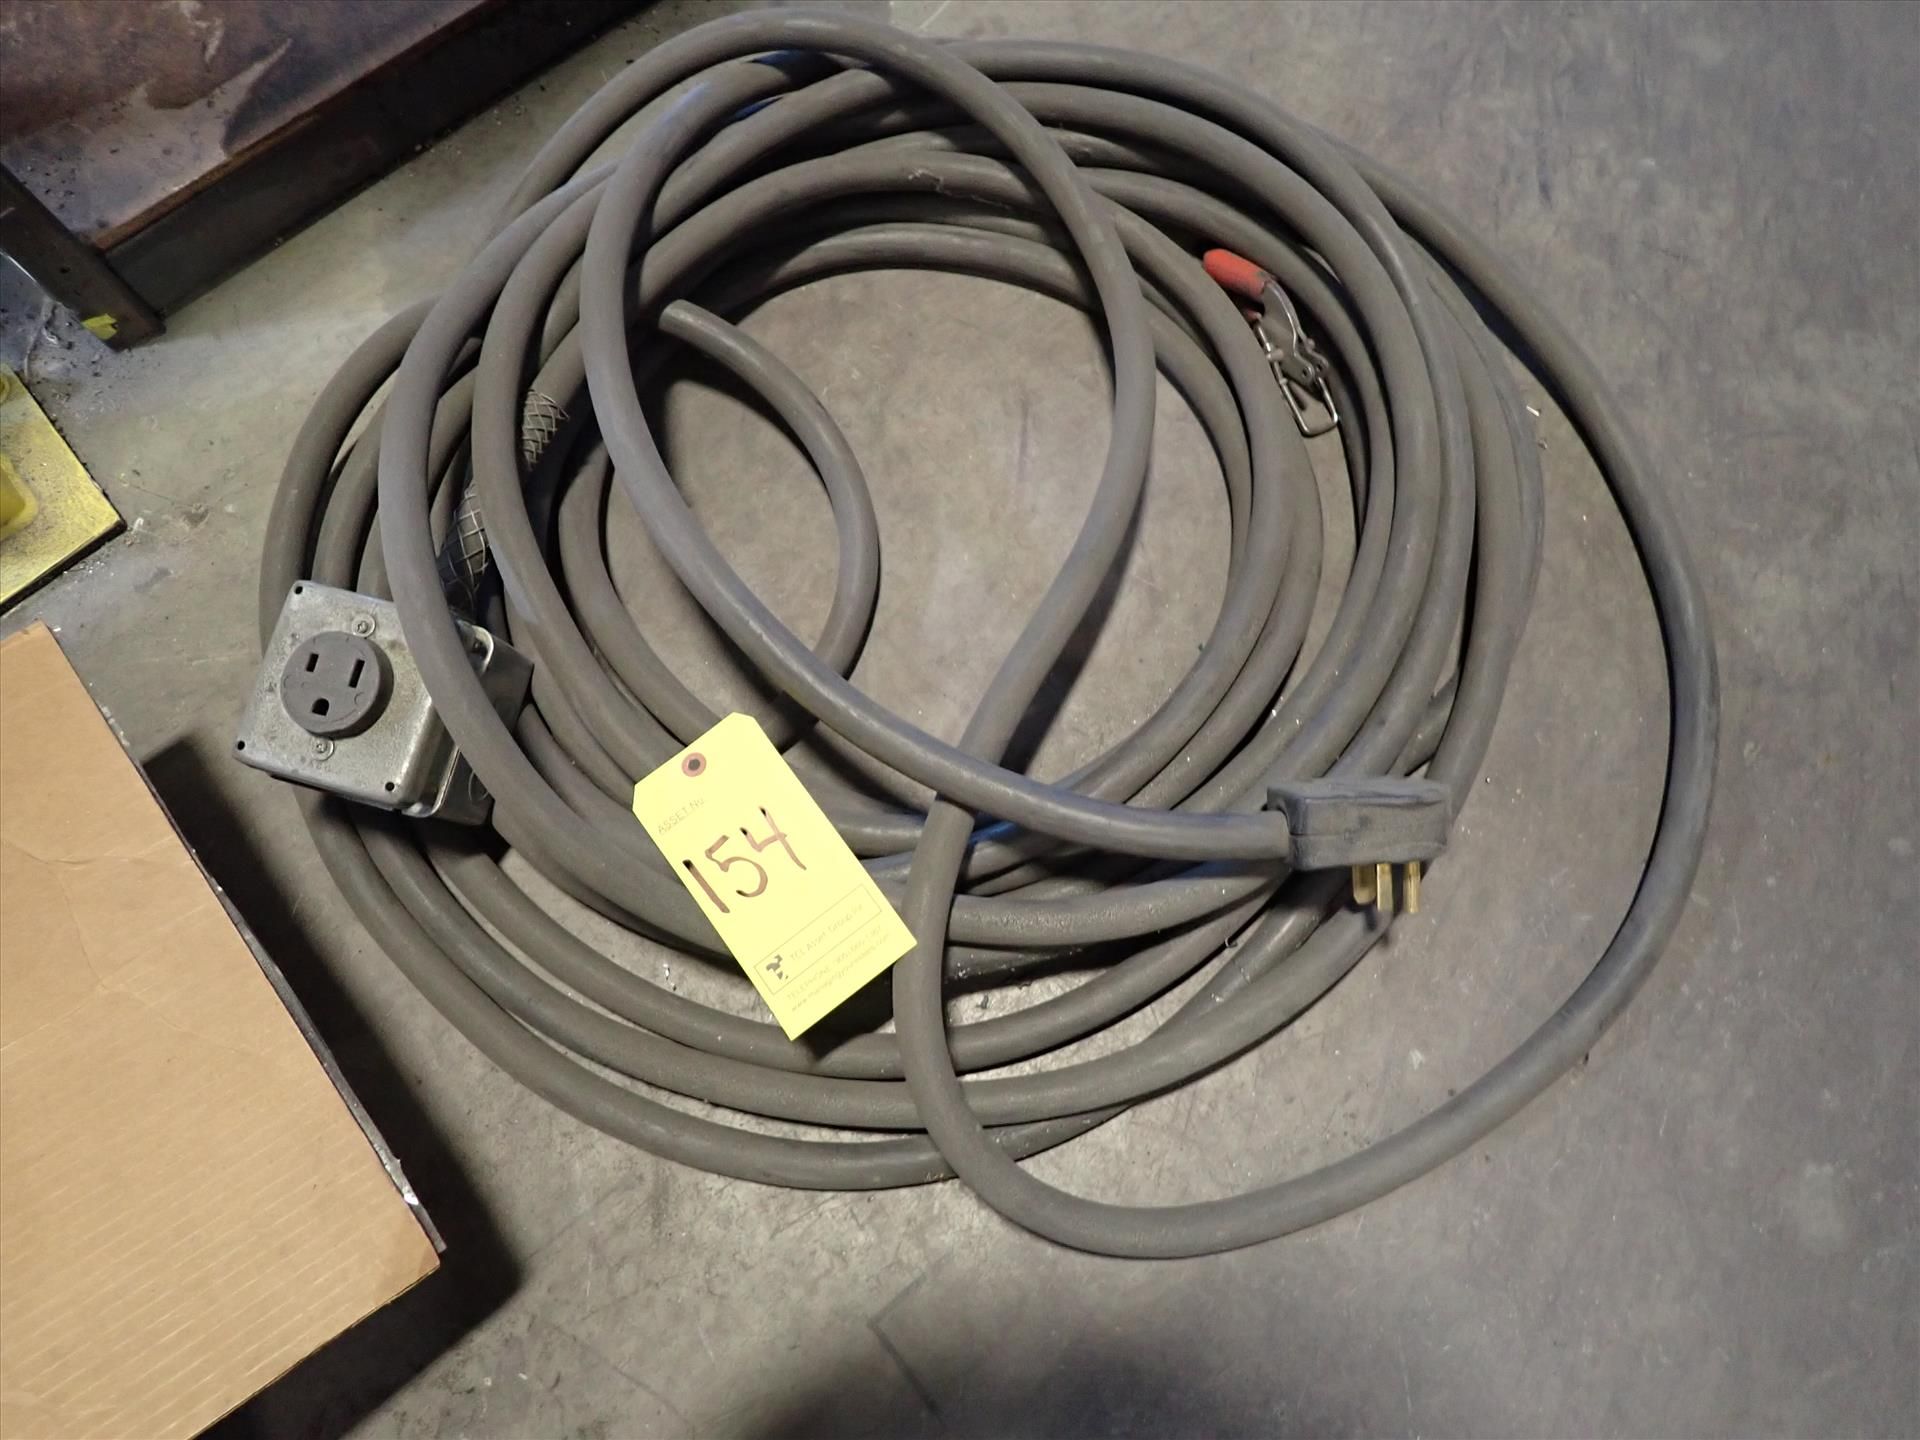 250V extension cord